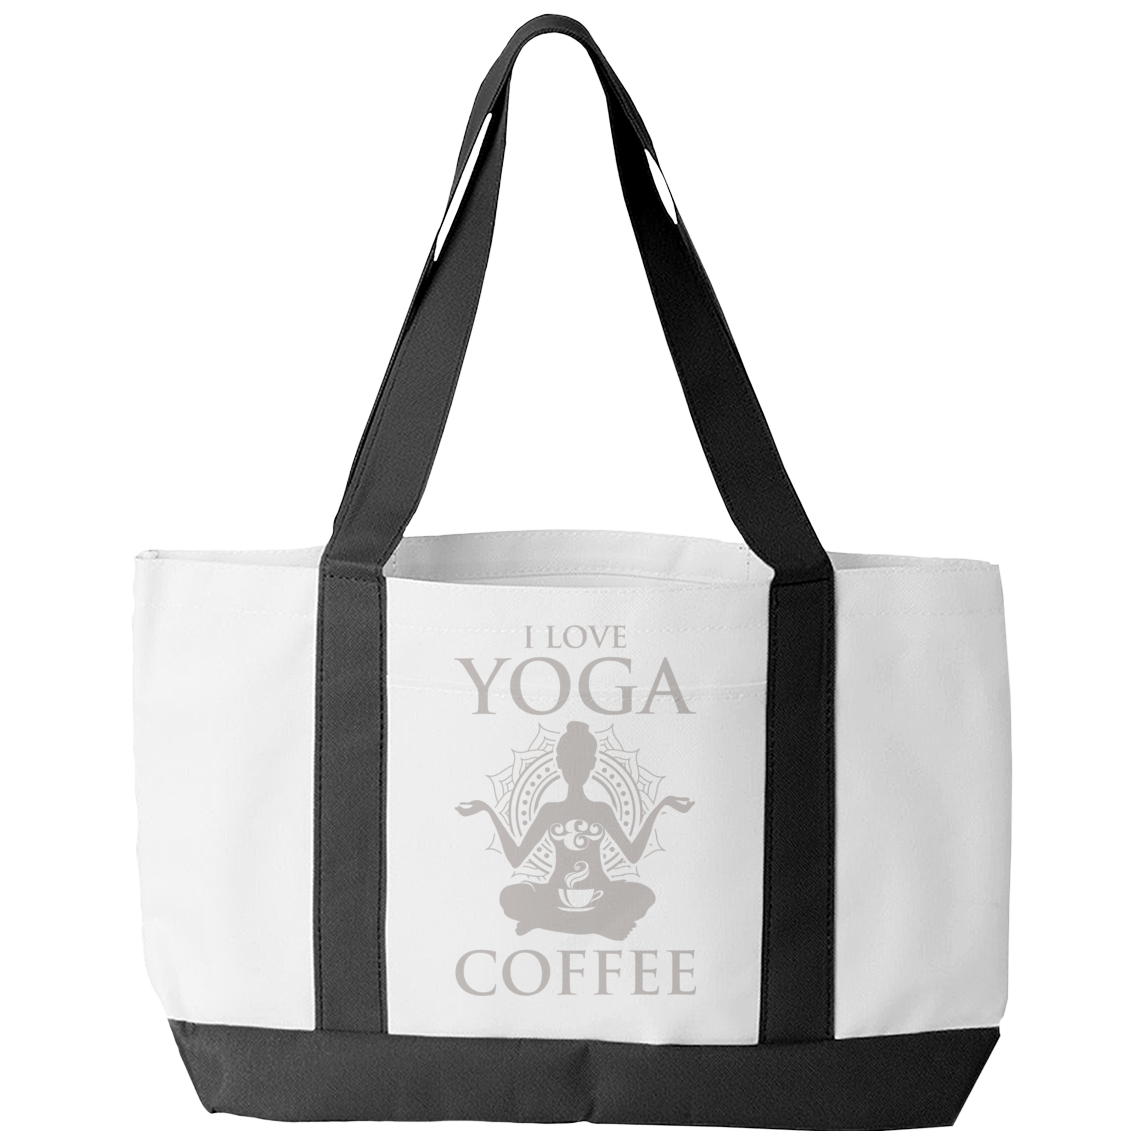 Limited Edition - I Love Yoga & Coffee